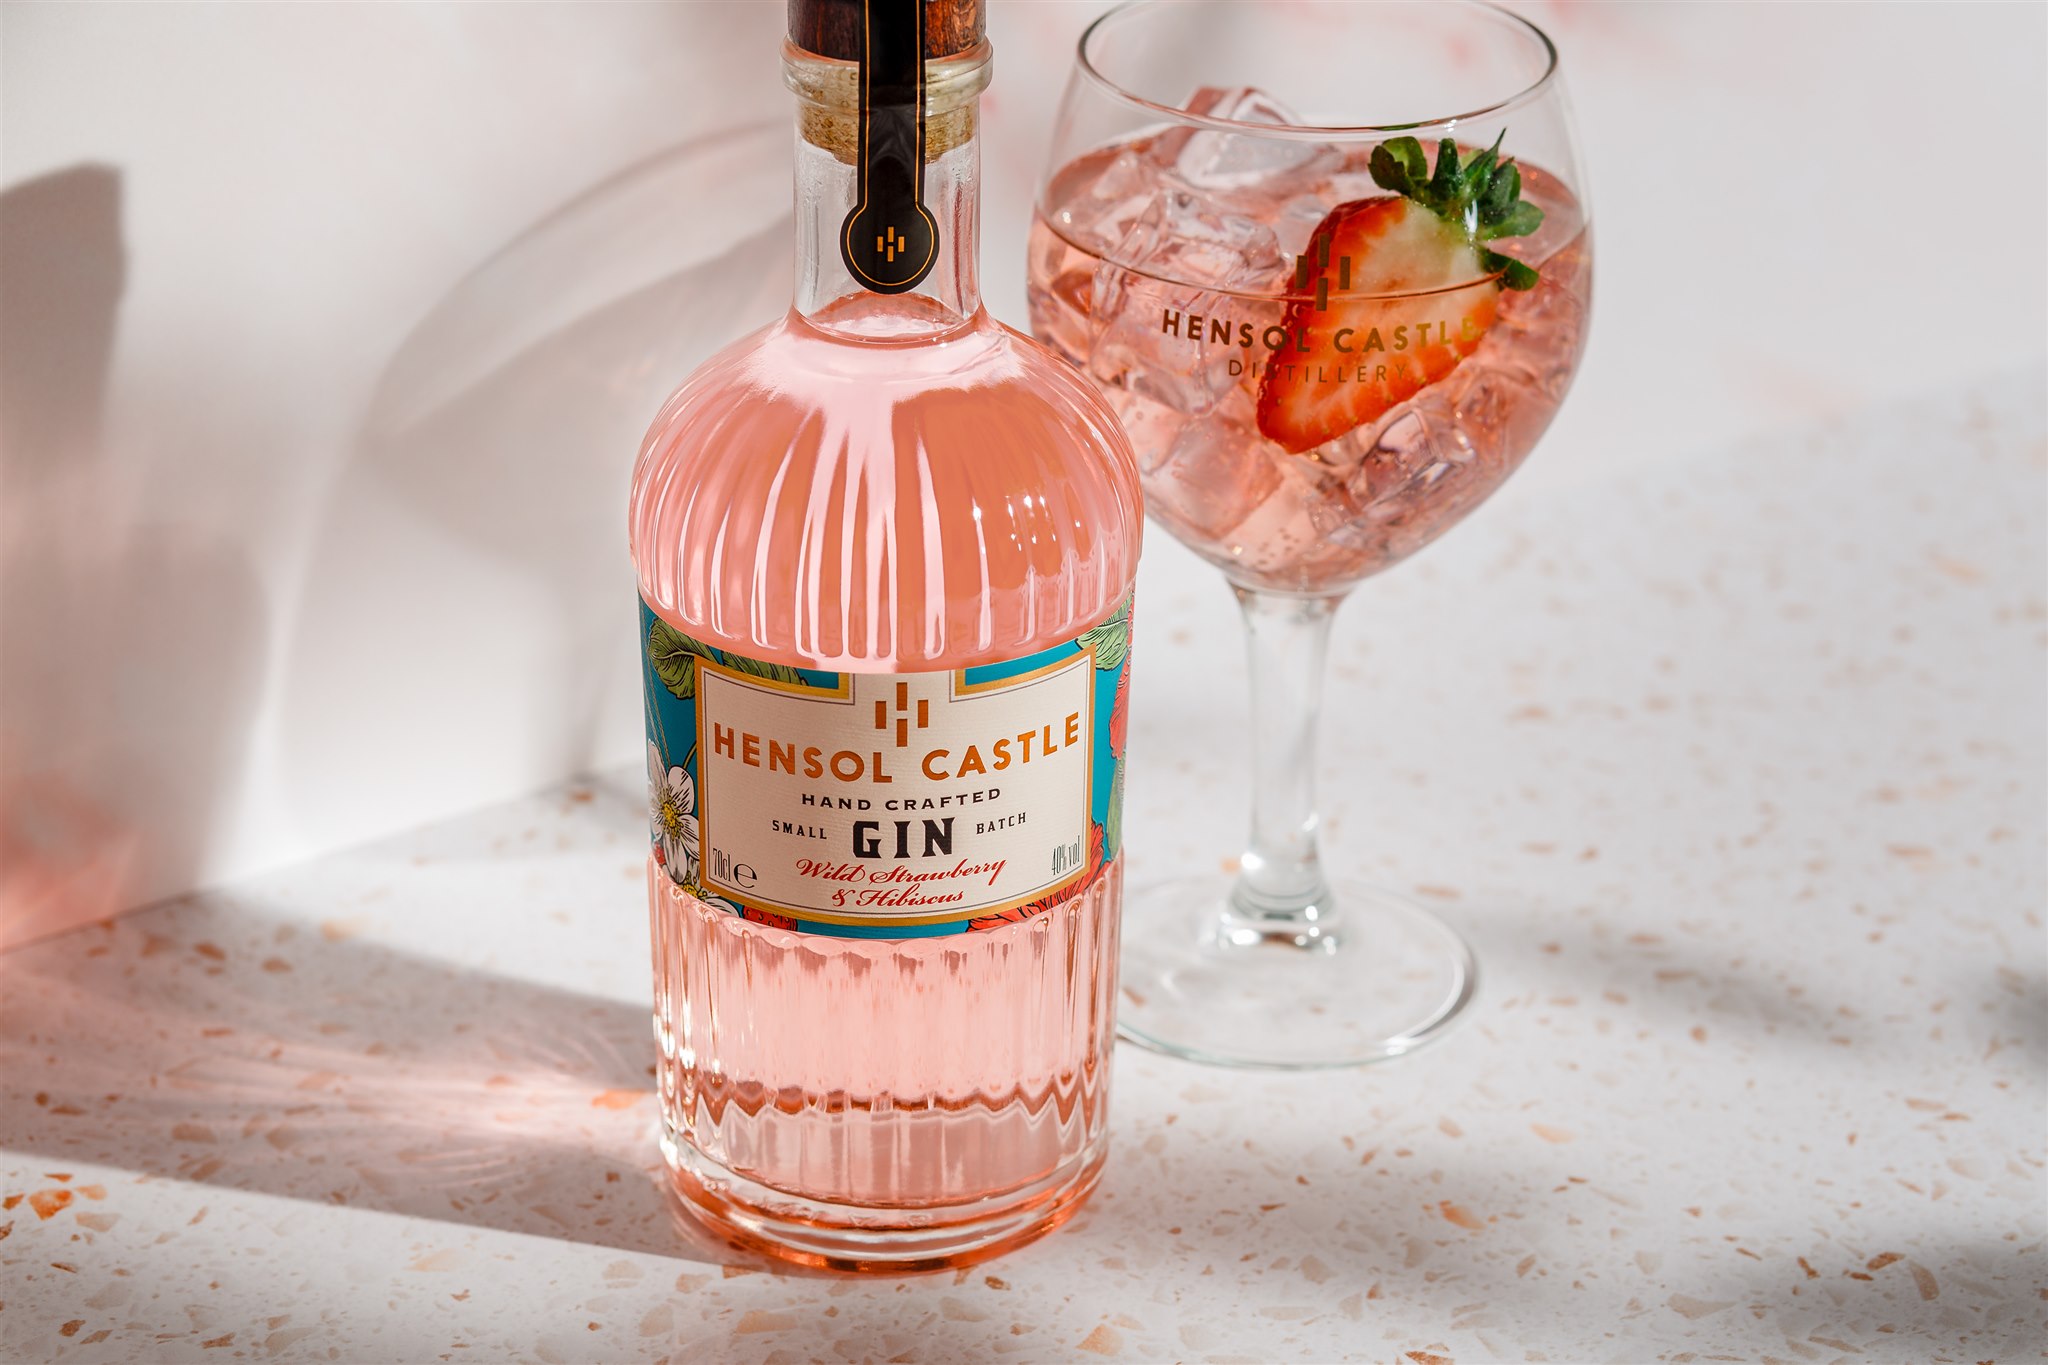 Hensol Castle Wild Strawberry & Hibiscus Gin